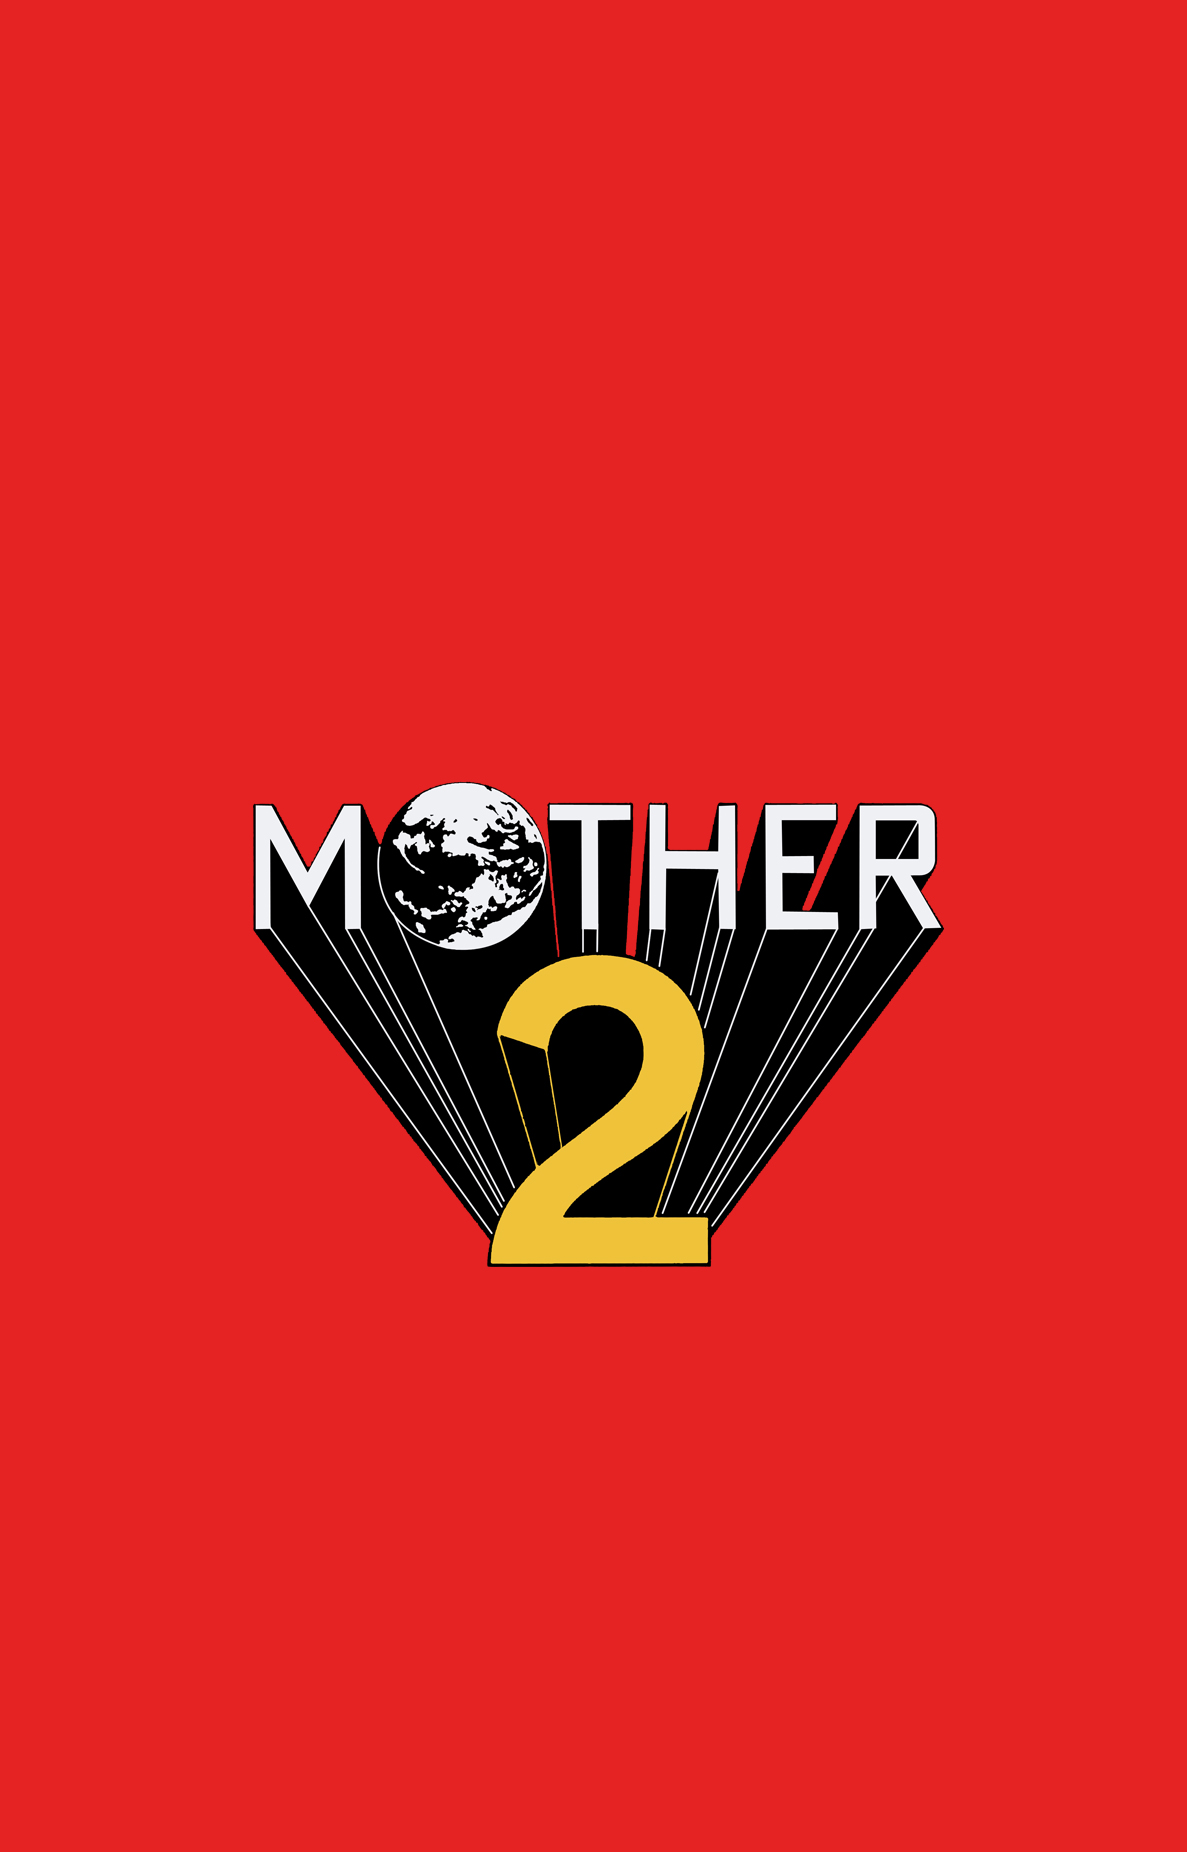 mother 2 nes